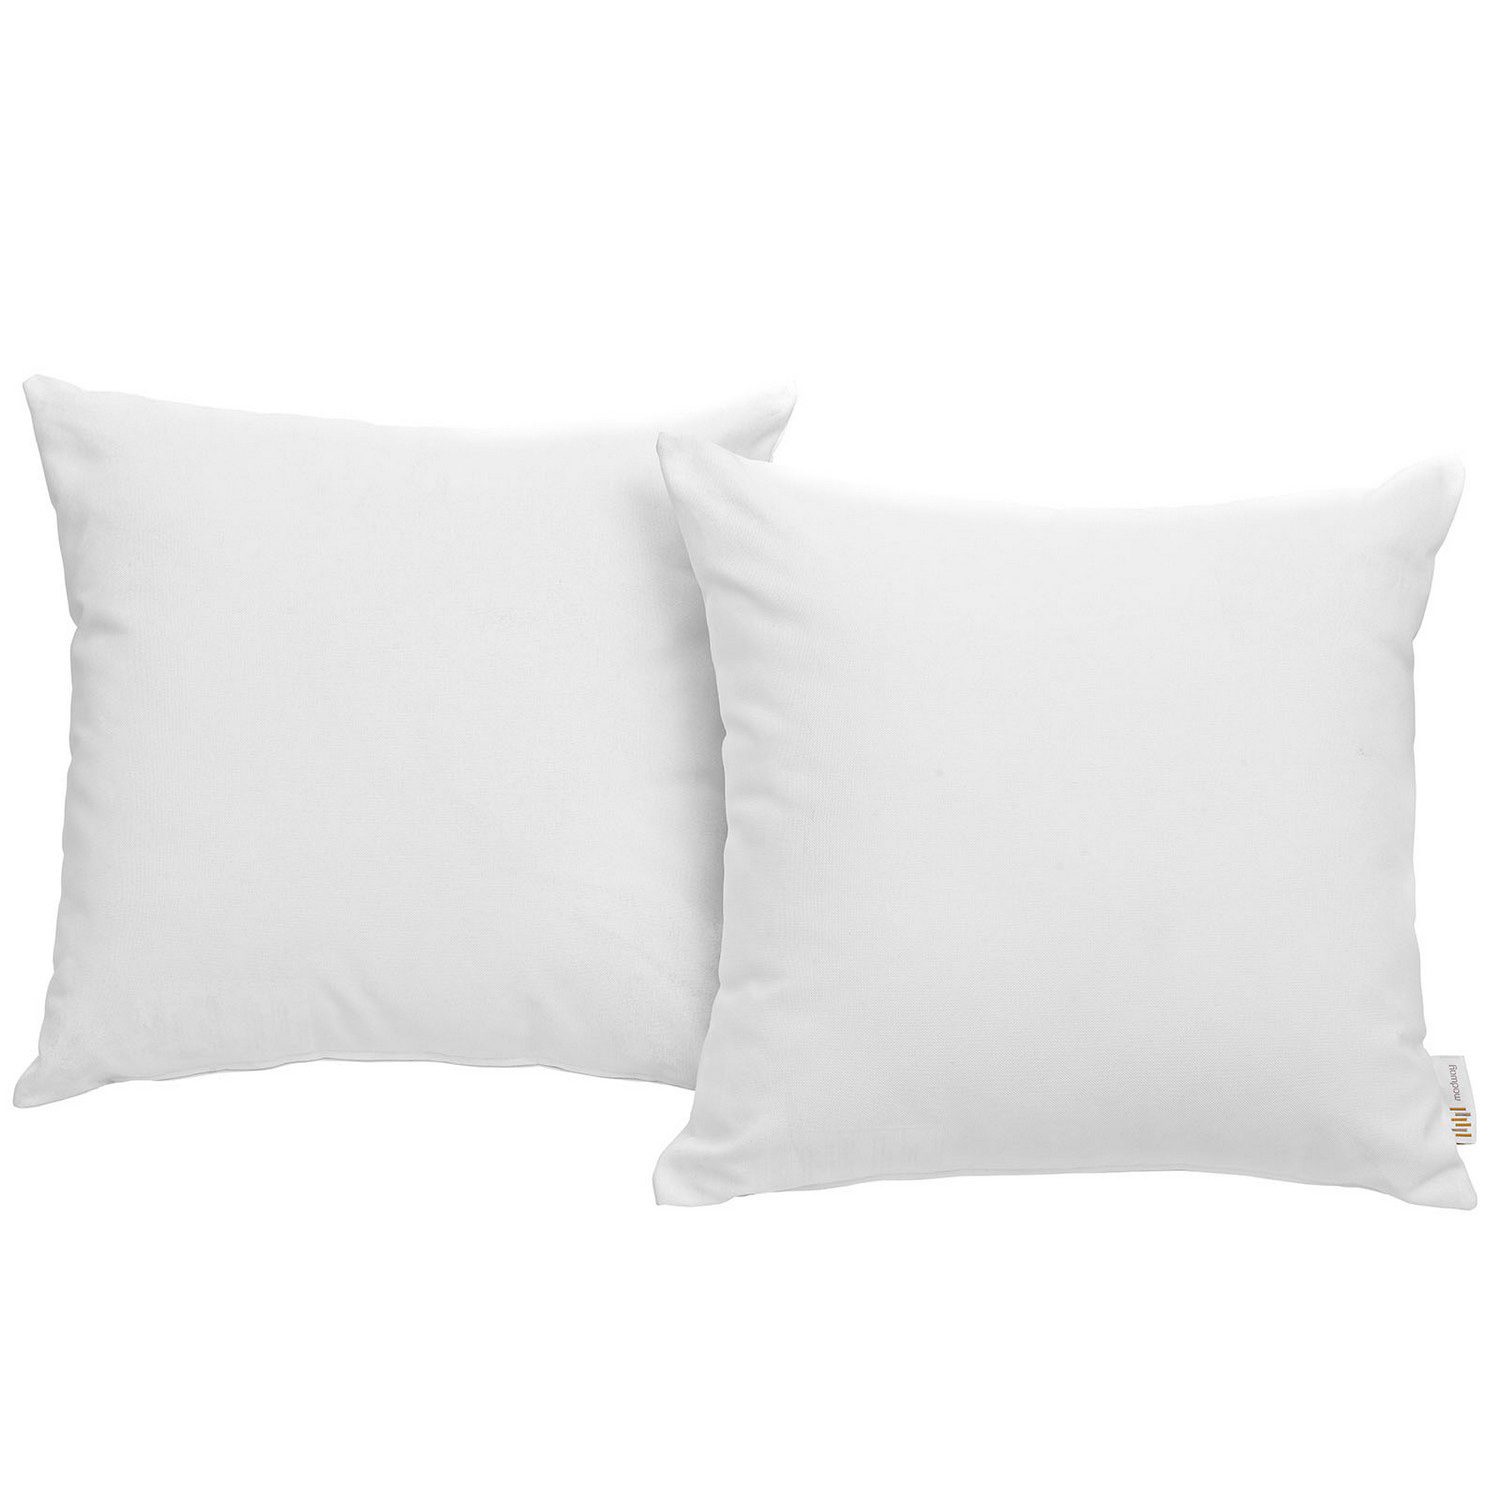 Modway Convene Two Piece Outdoor Patio Pillow Set - White